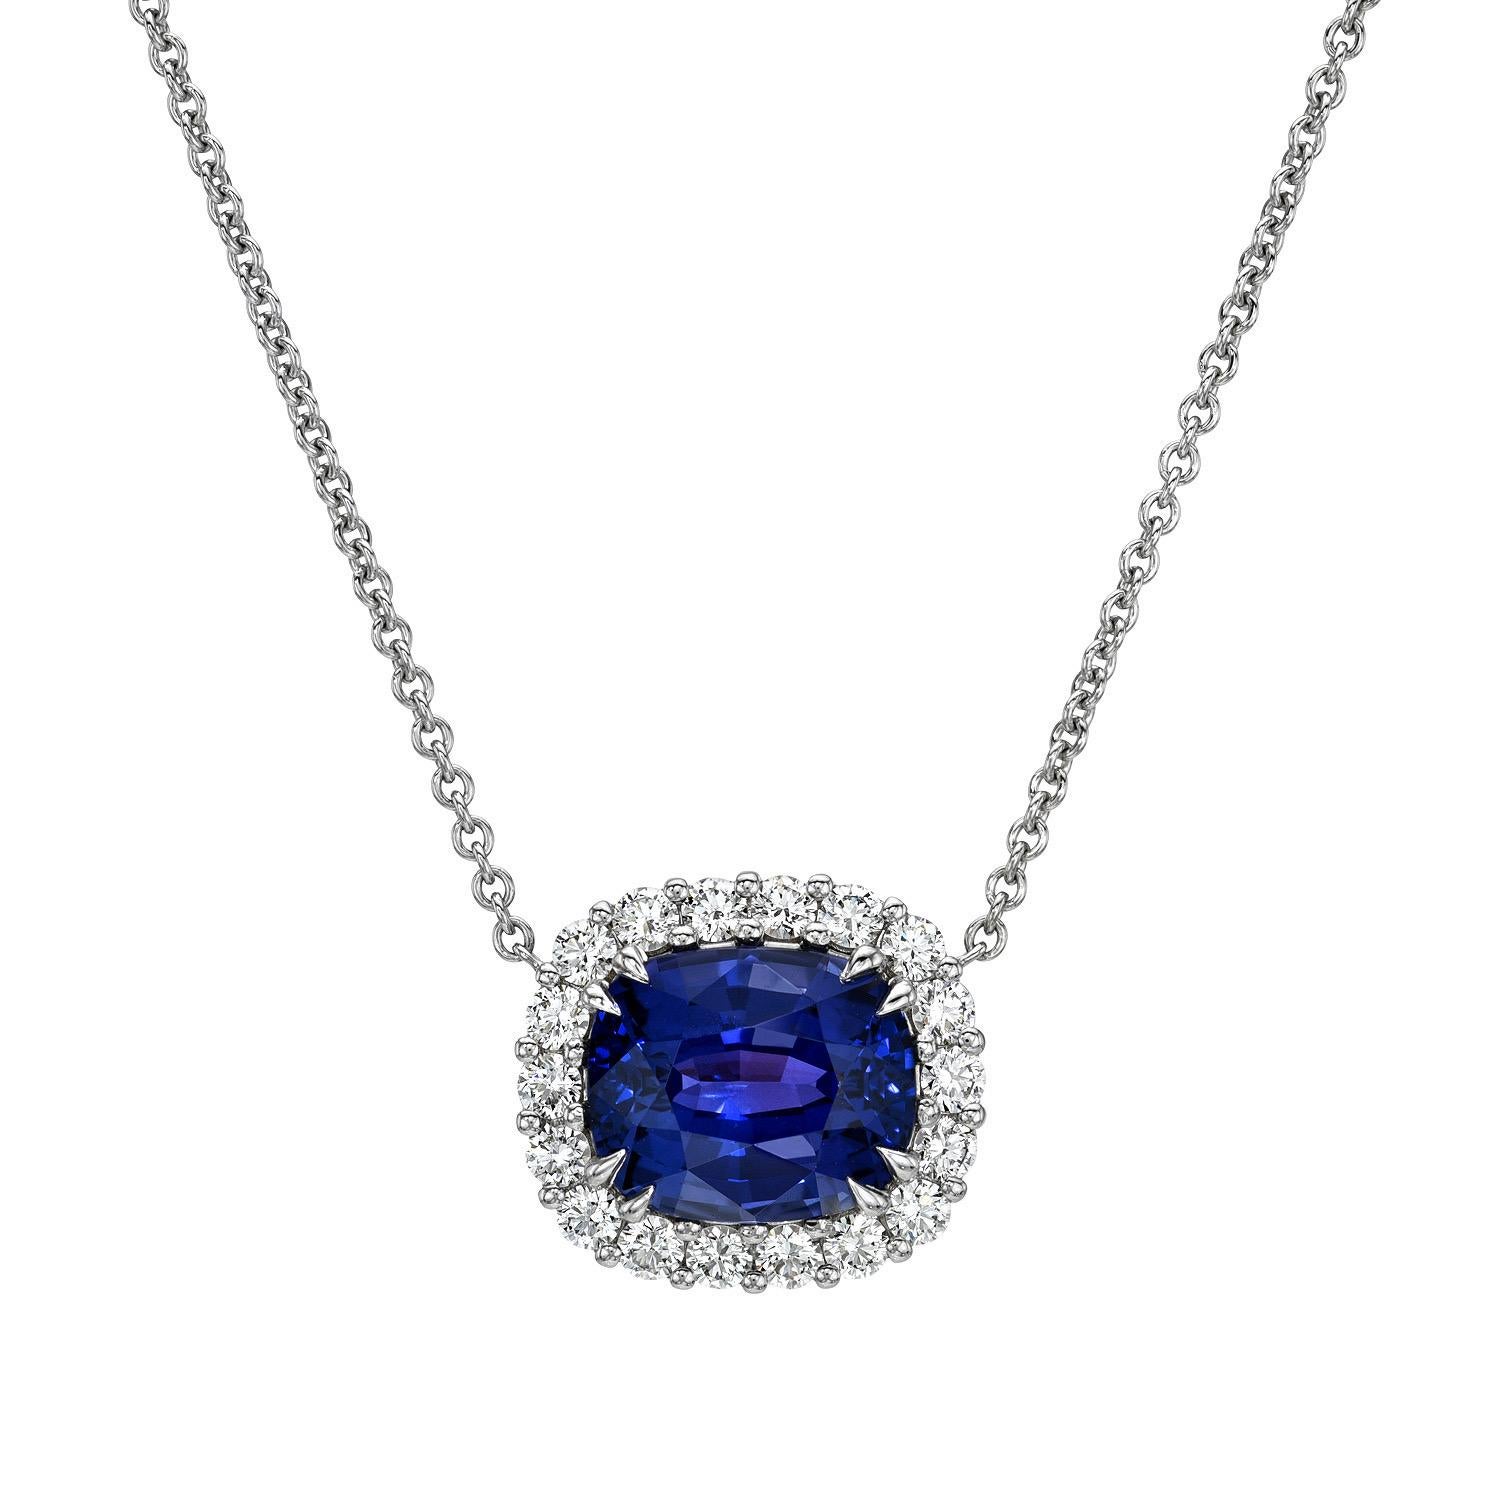 Contemporary Color Change Blue Purple Sapphire Necklace 4.50 Carat Cushion Sri Lanka For Sale